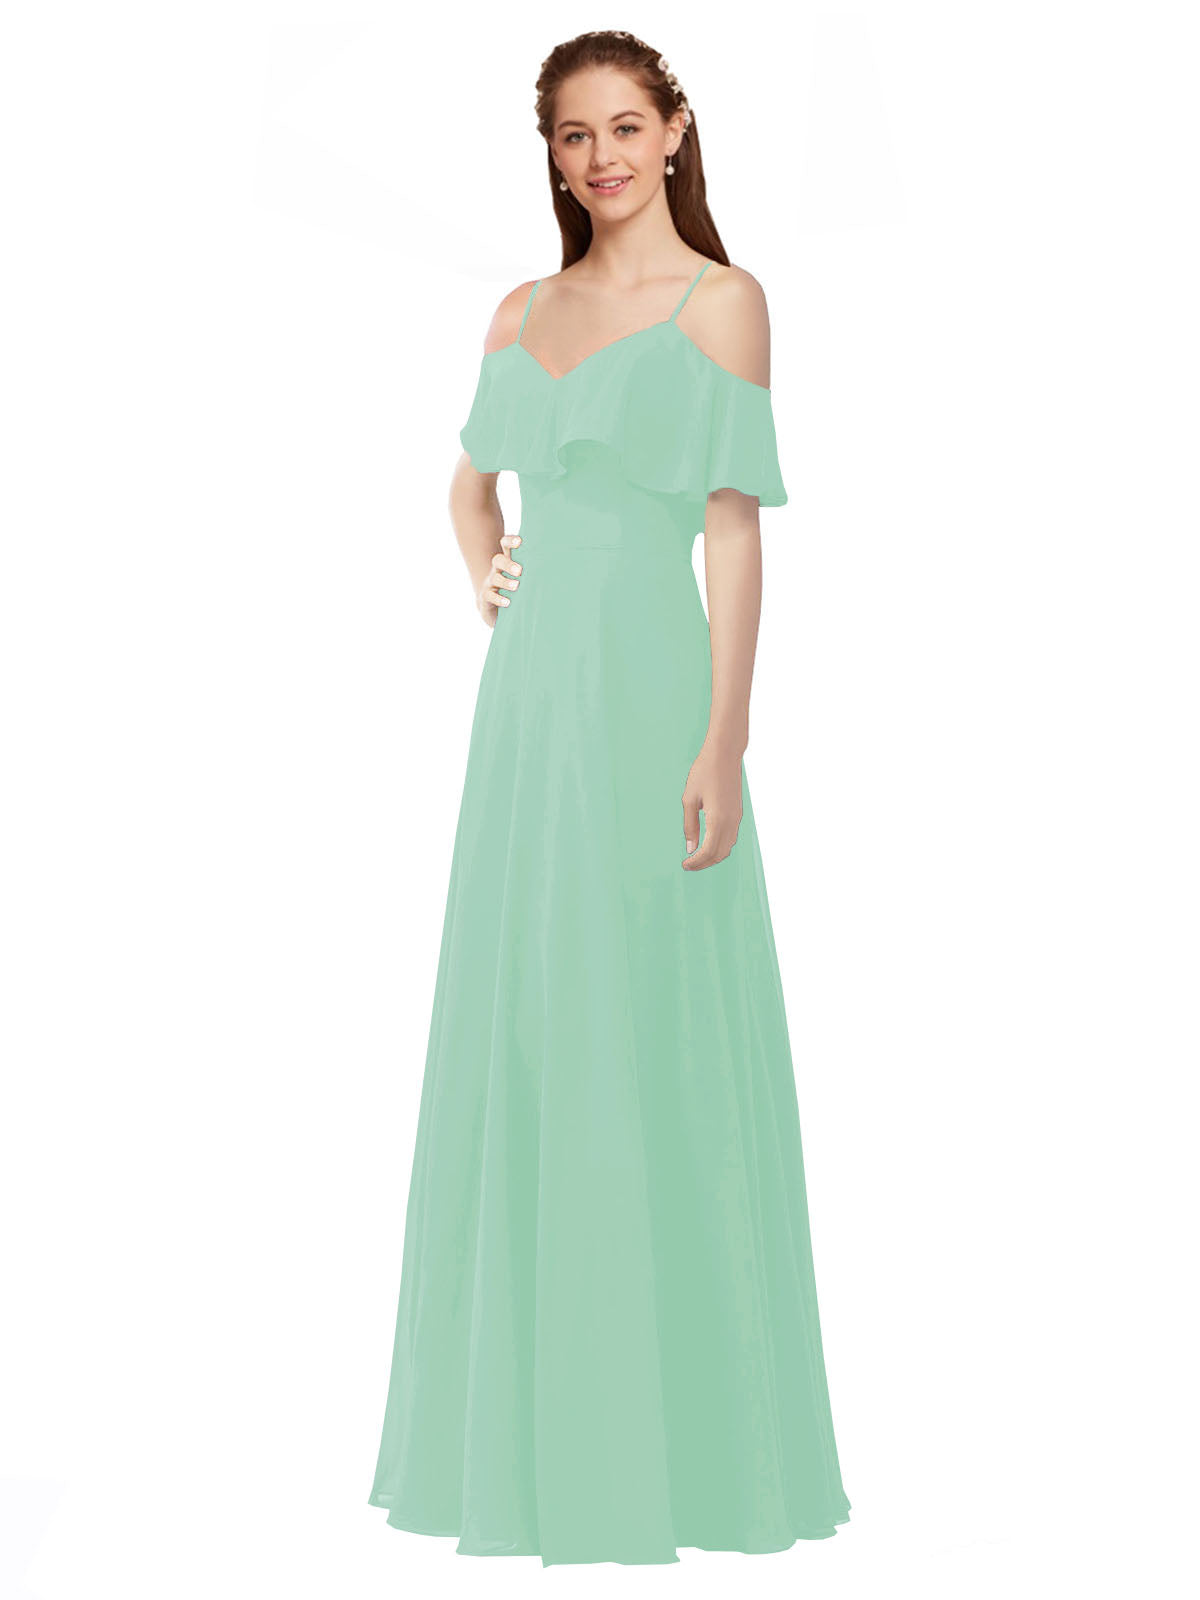 Mint Green A-Line Off the Shoulder V-Neck Sleeveless Long Bridesmaid Dress Marianna